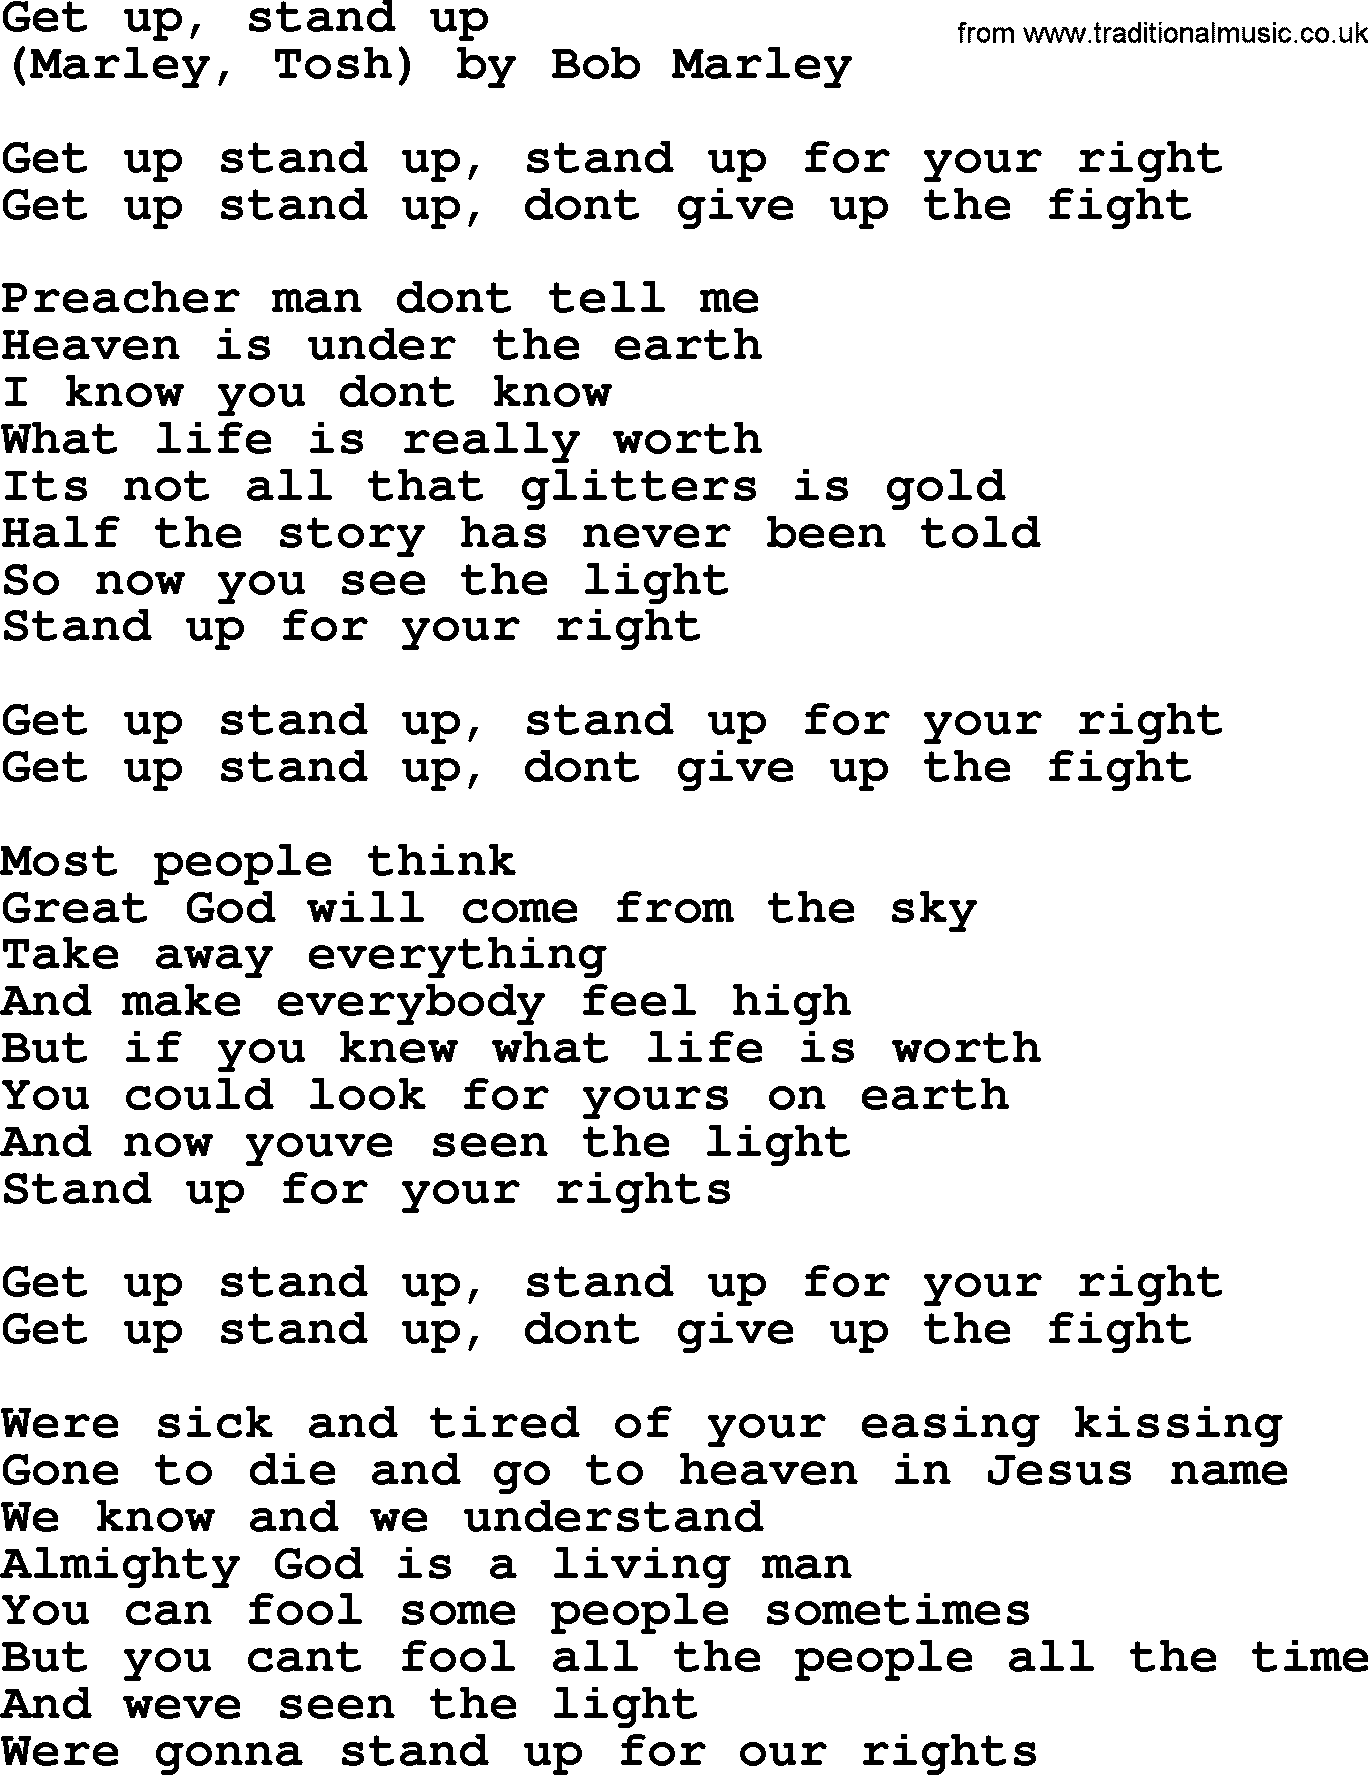 Bruce Springsteen song: Get Up, Stand Up lyrics